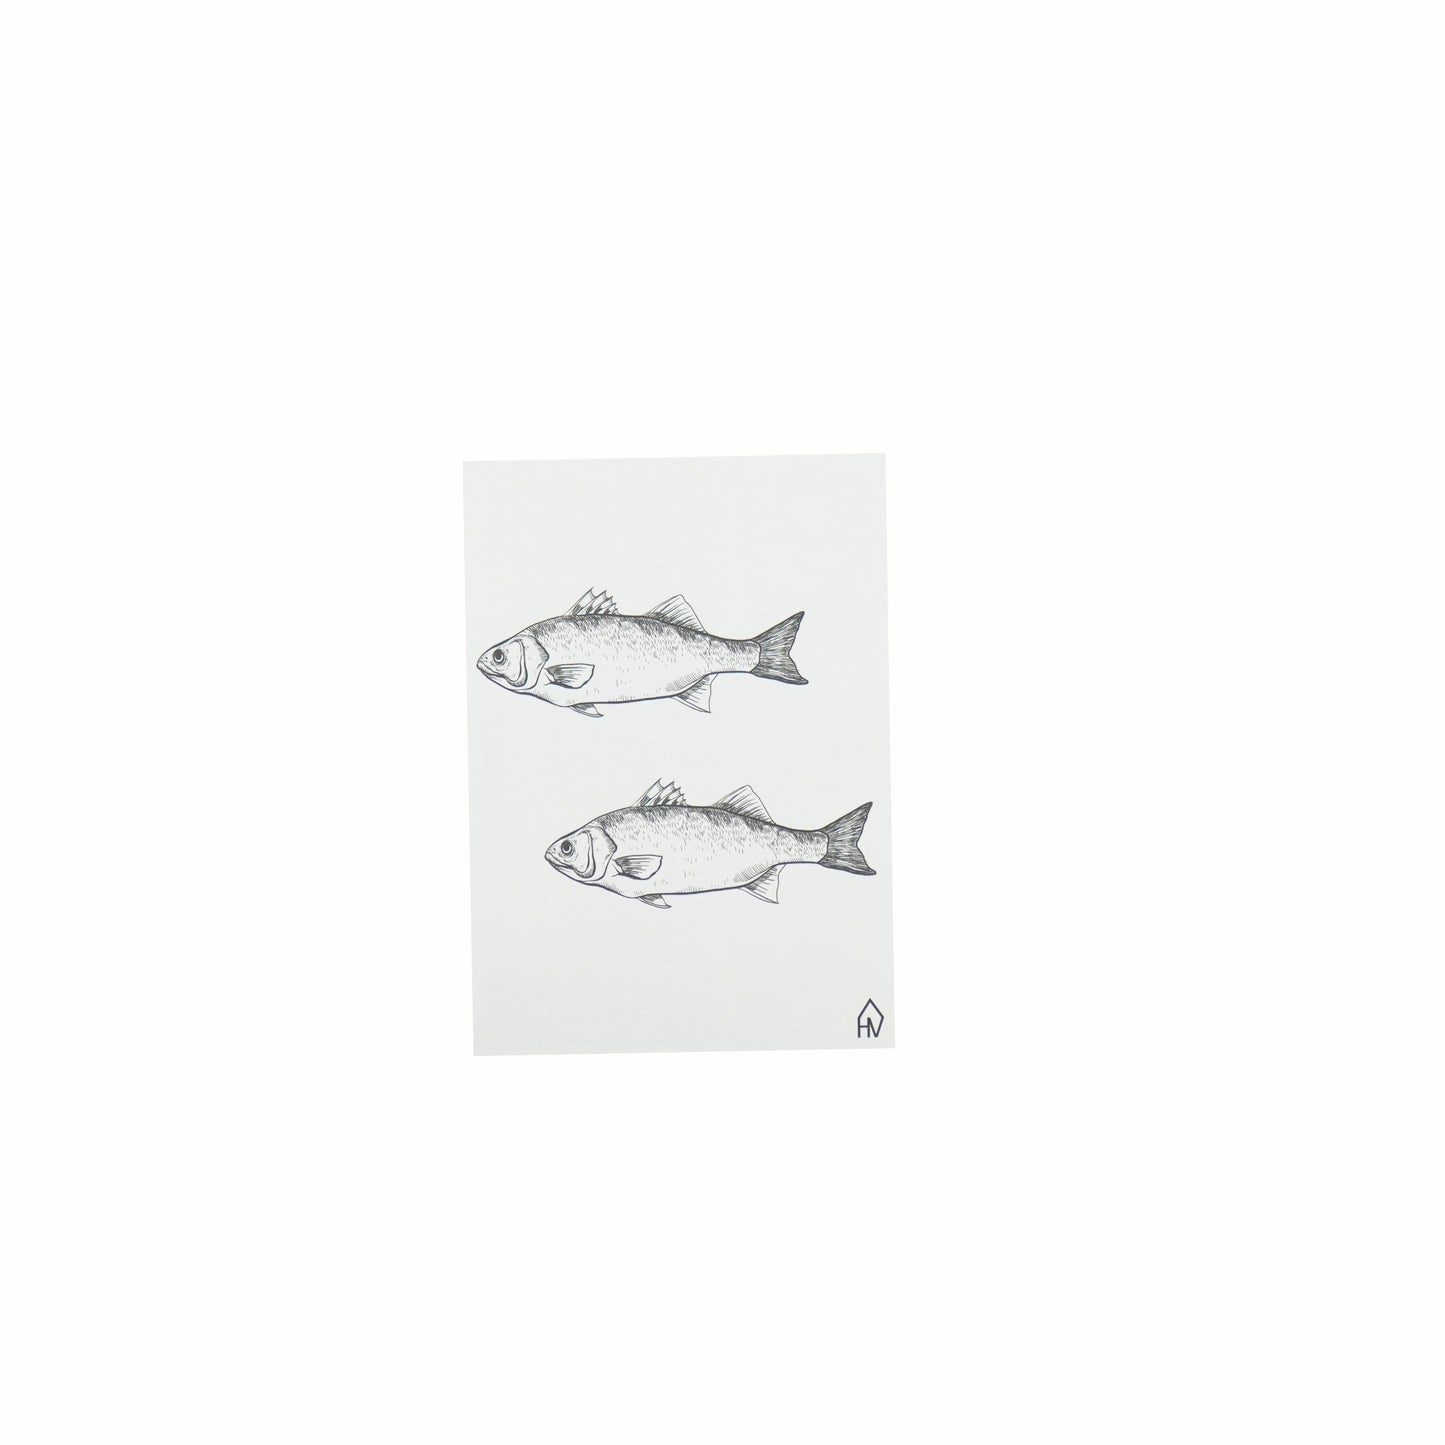 ansichtkaart met twee vissen wit 